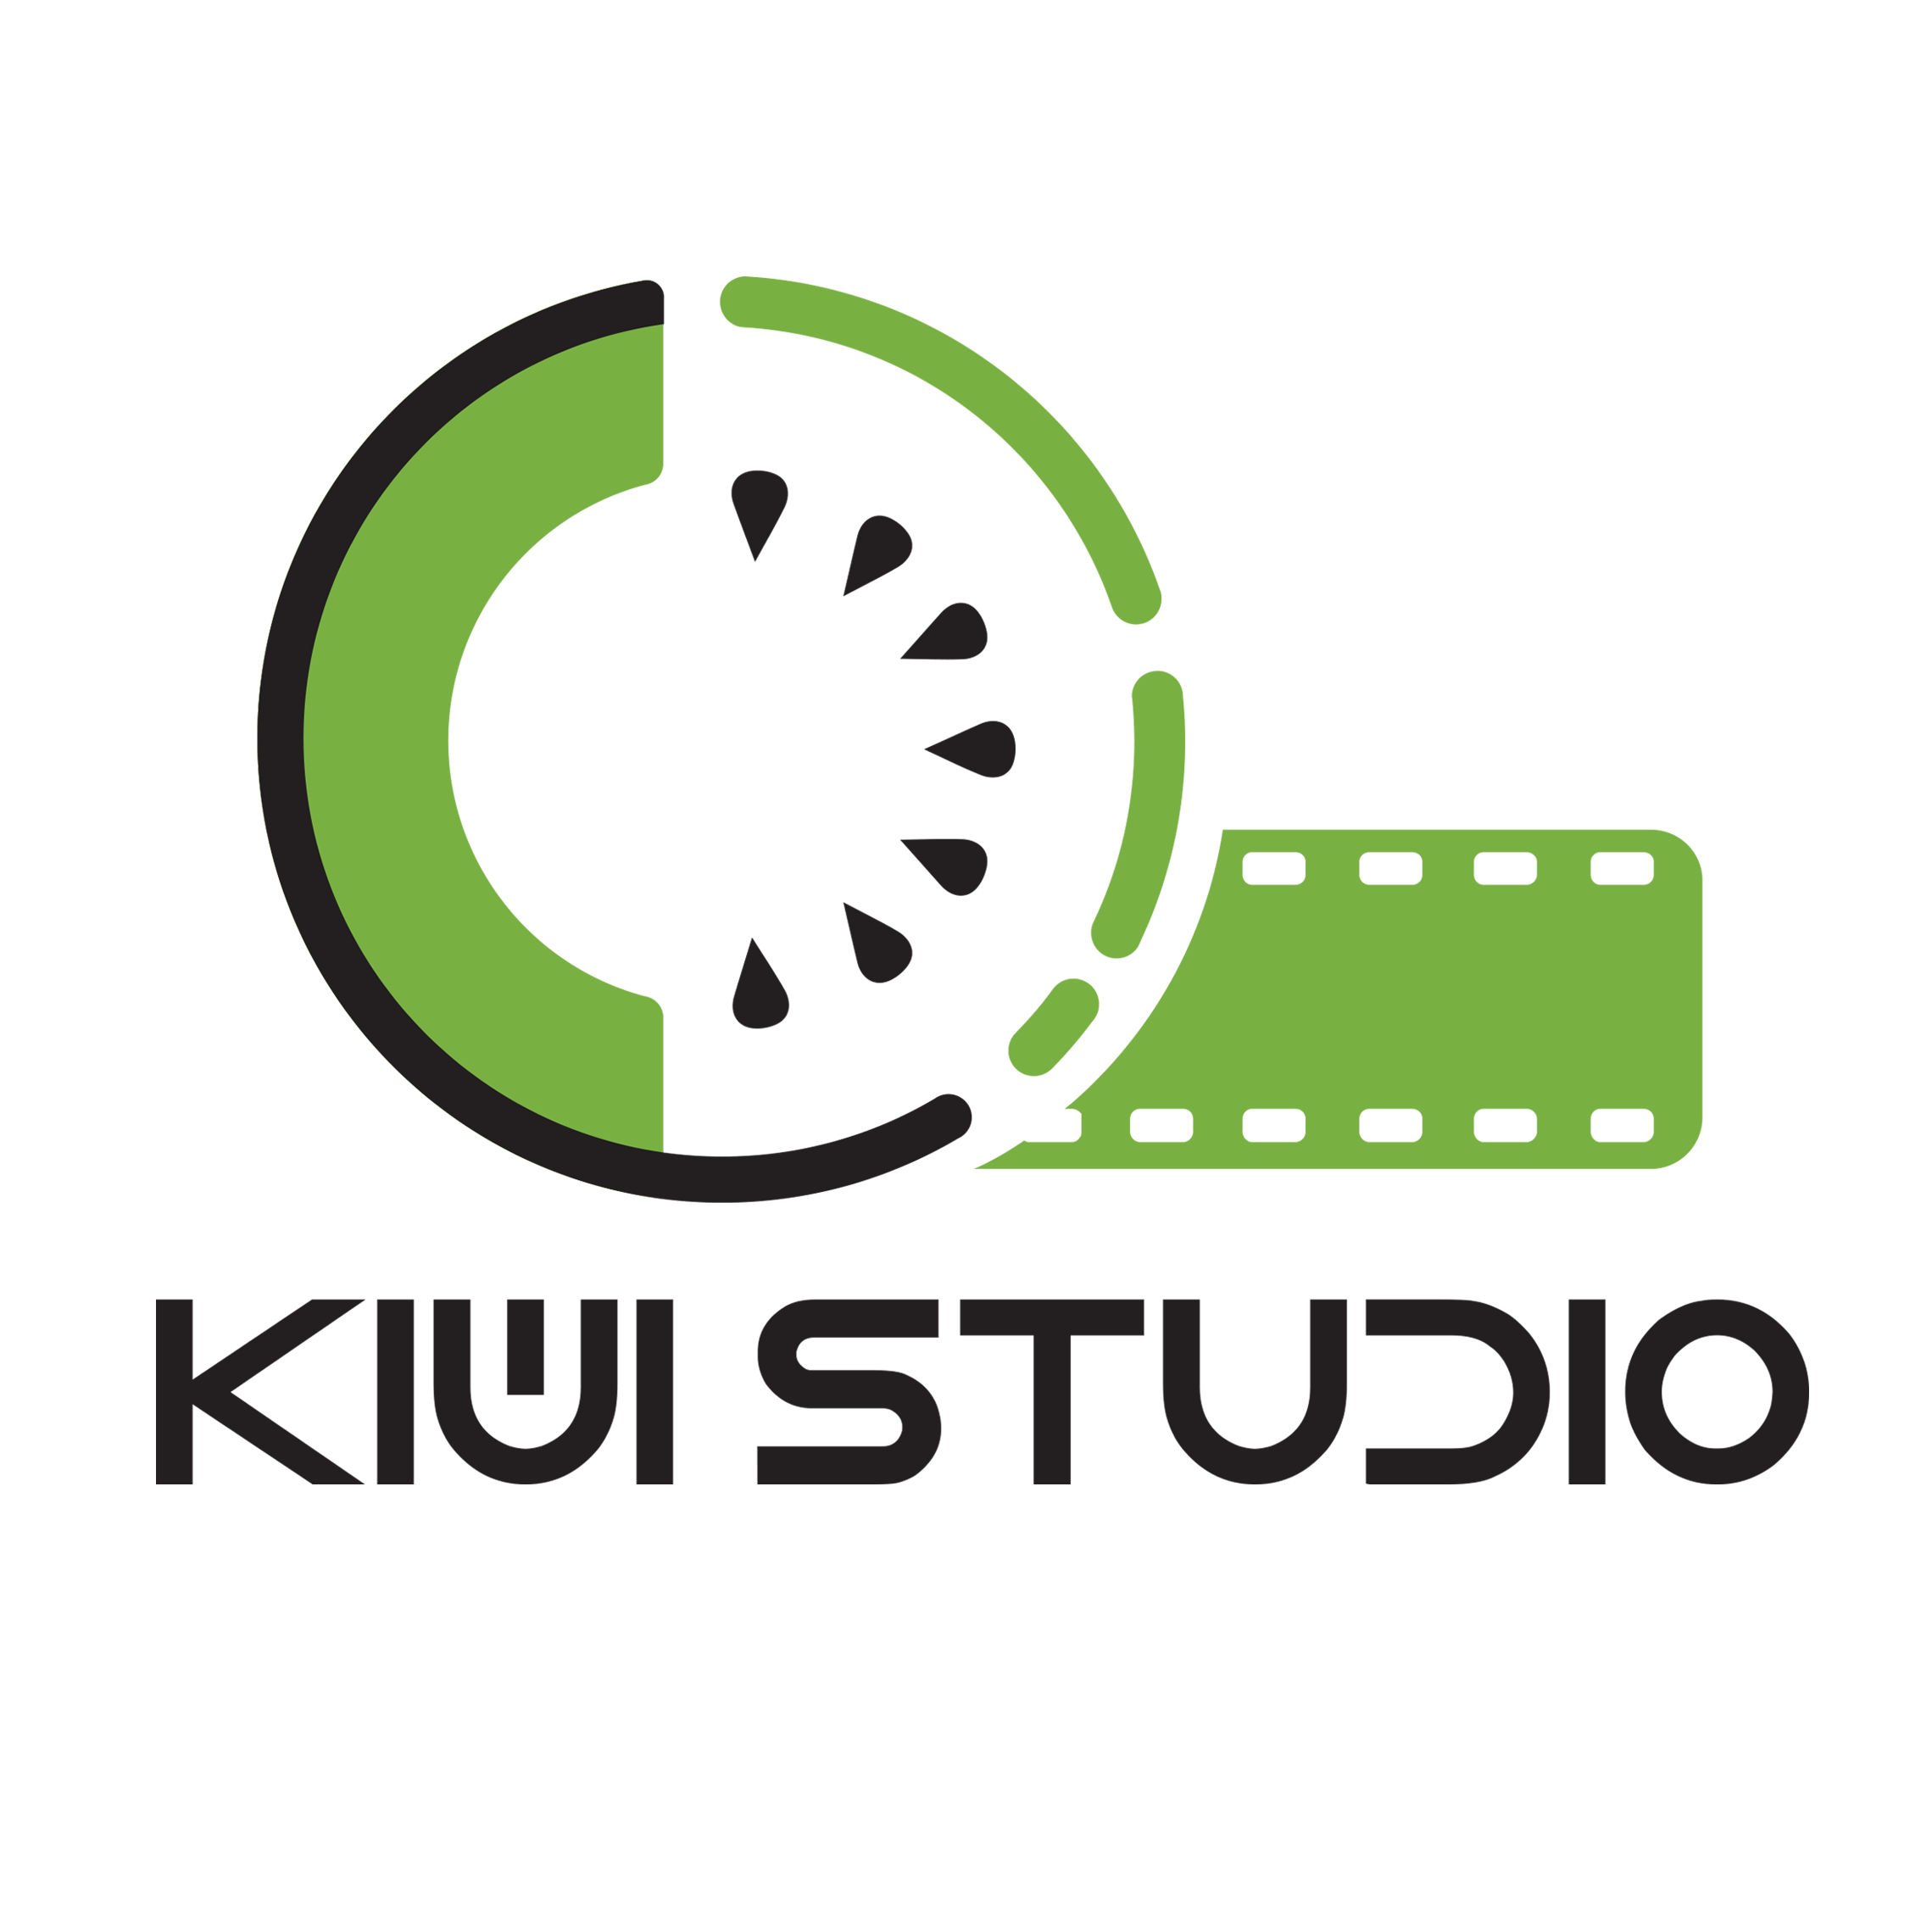 Kiwi Studio